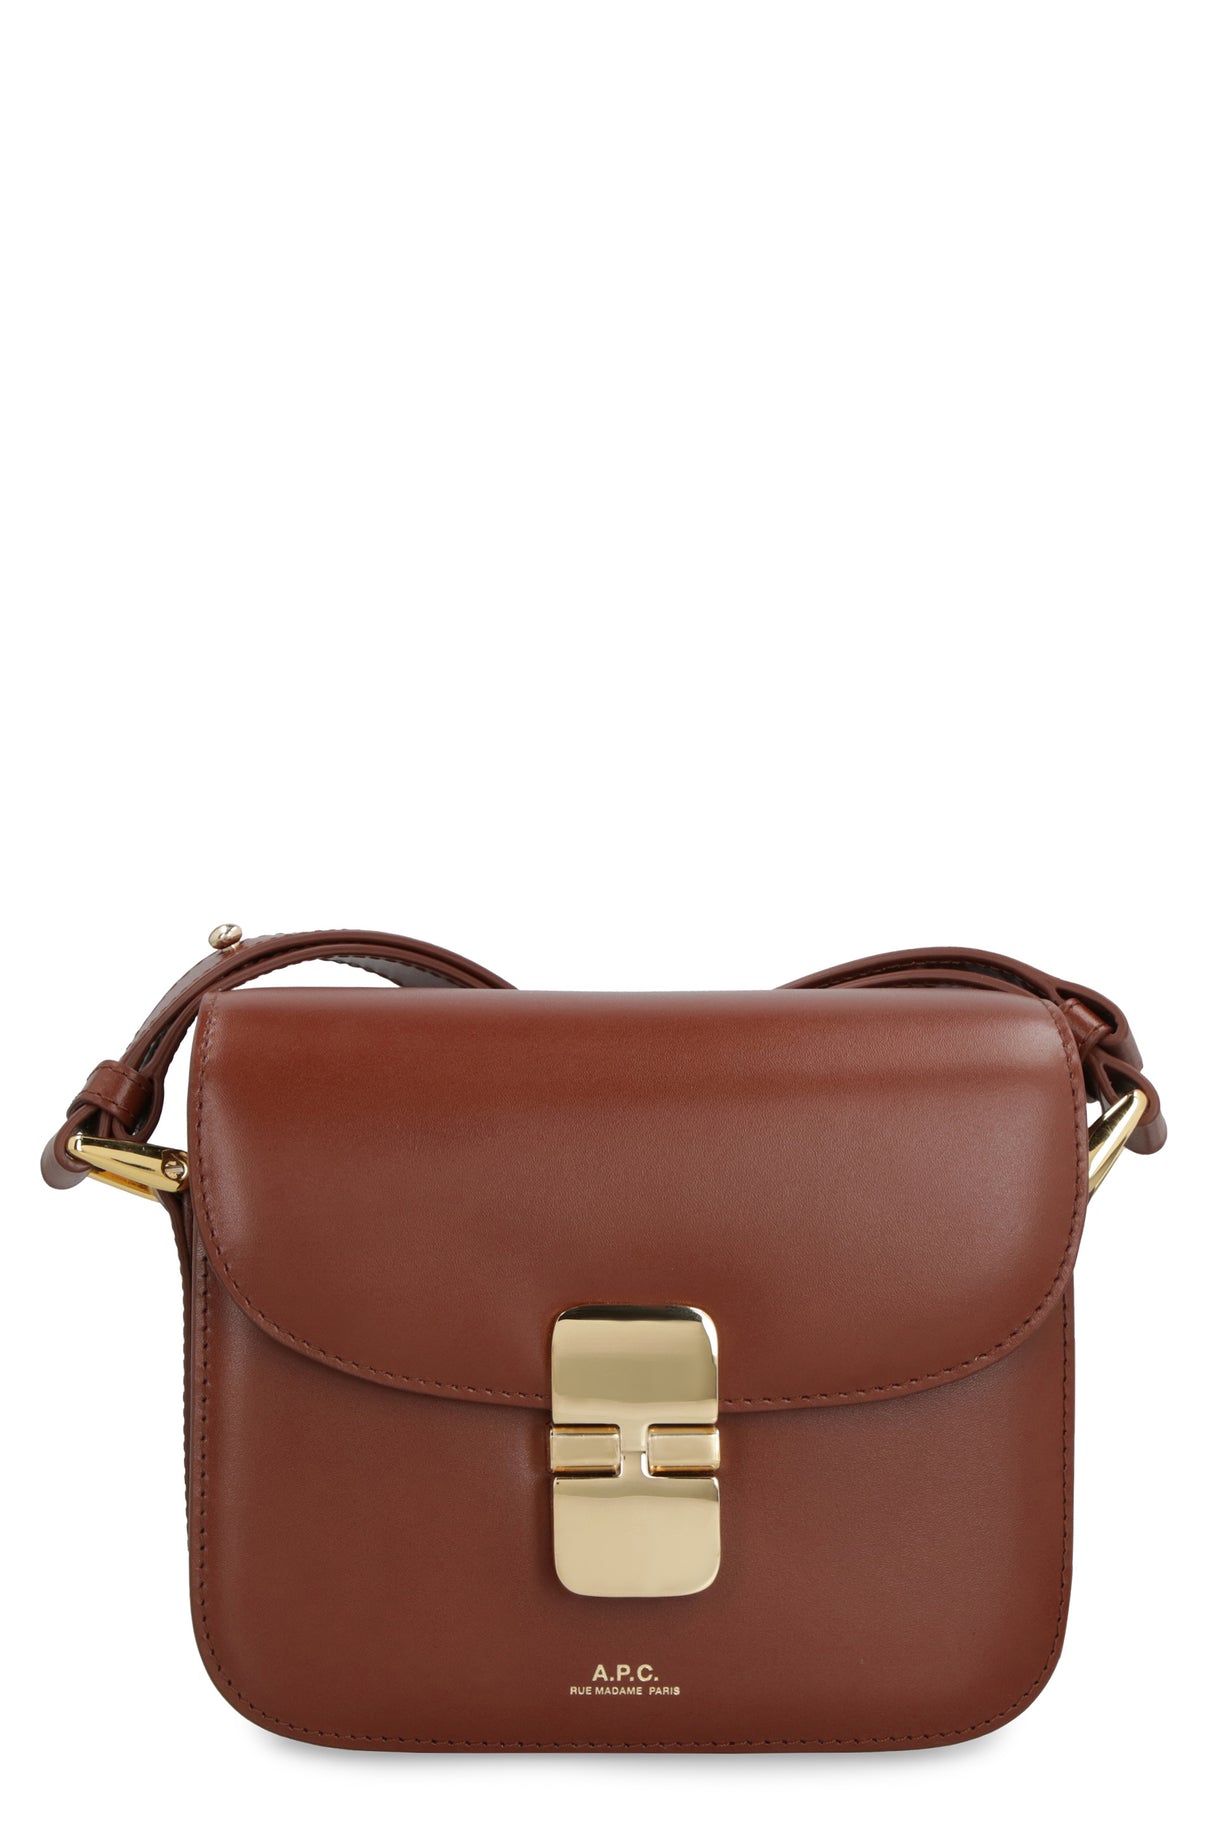 A.P.C. Elegant Mini Leather Shoulder Bag with Gold-Finish Metalware and Adjustable Strap - Brown